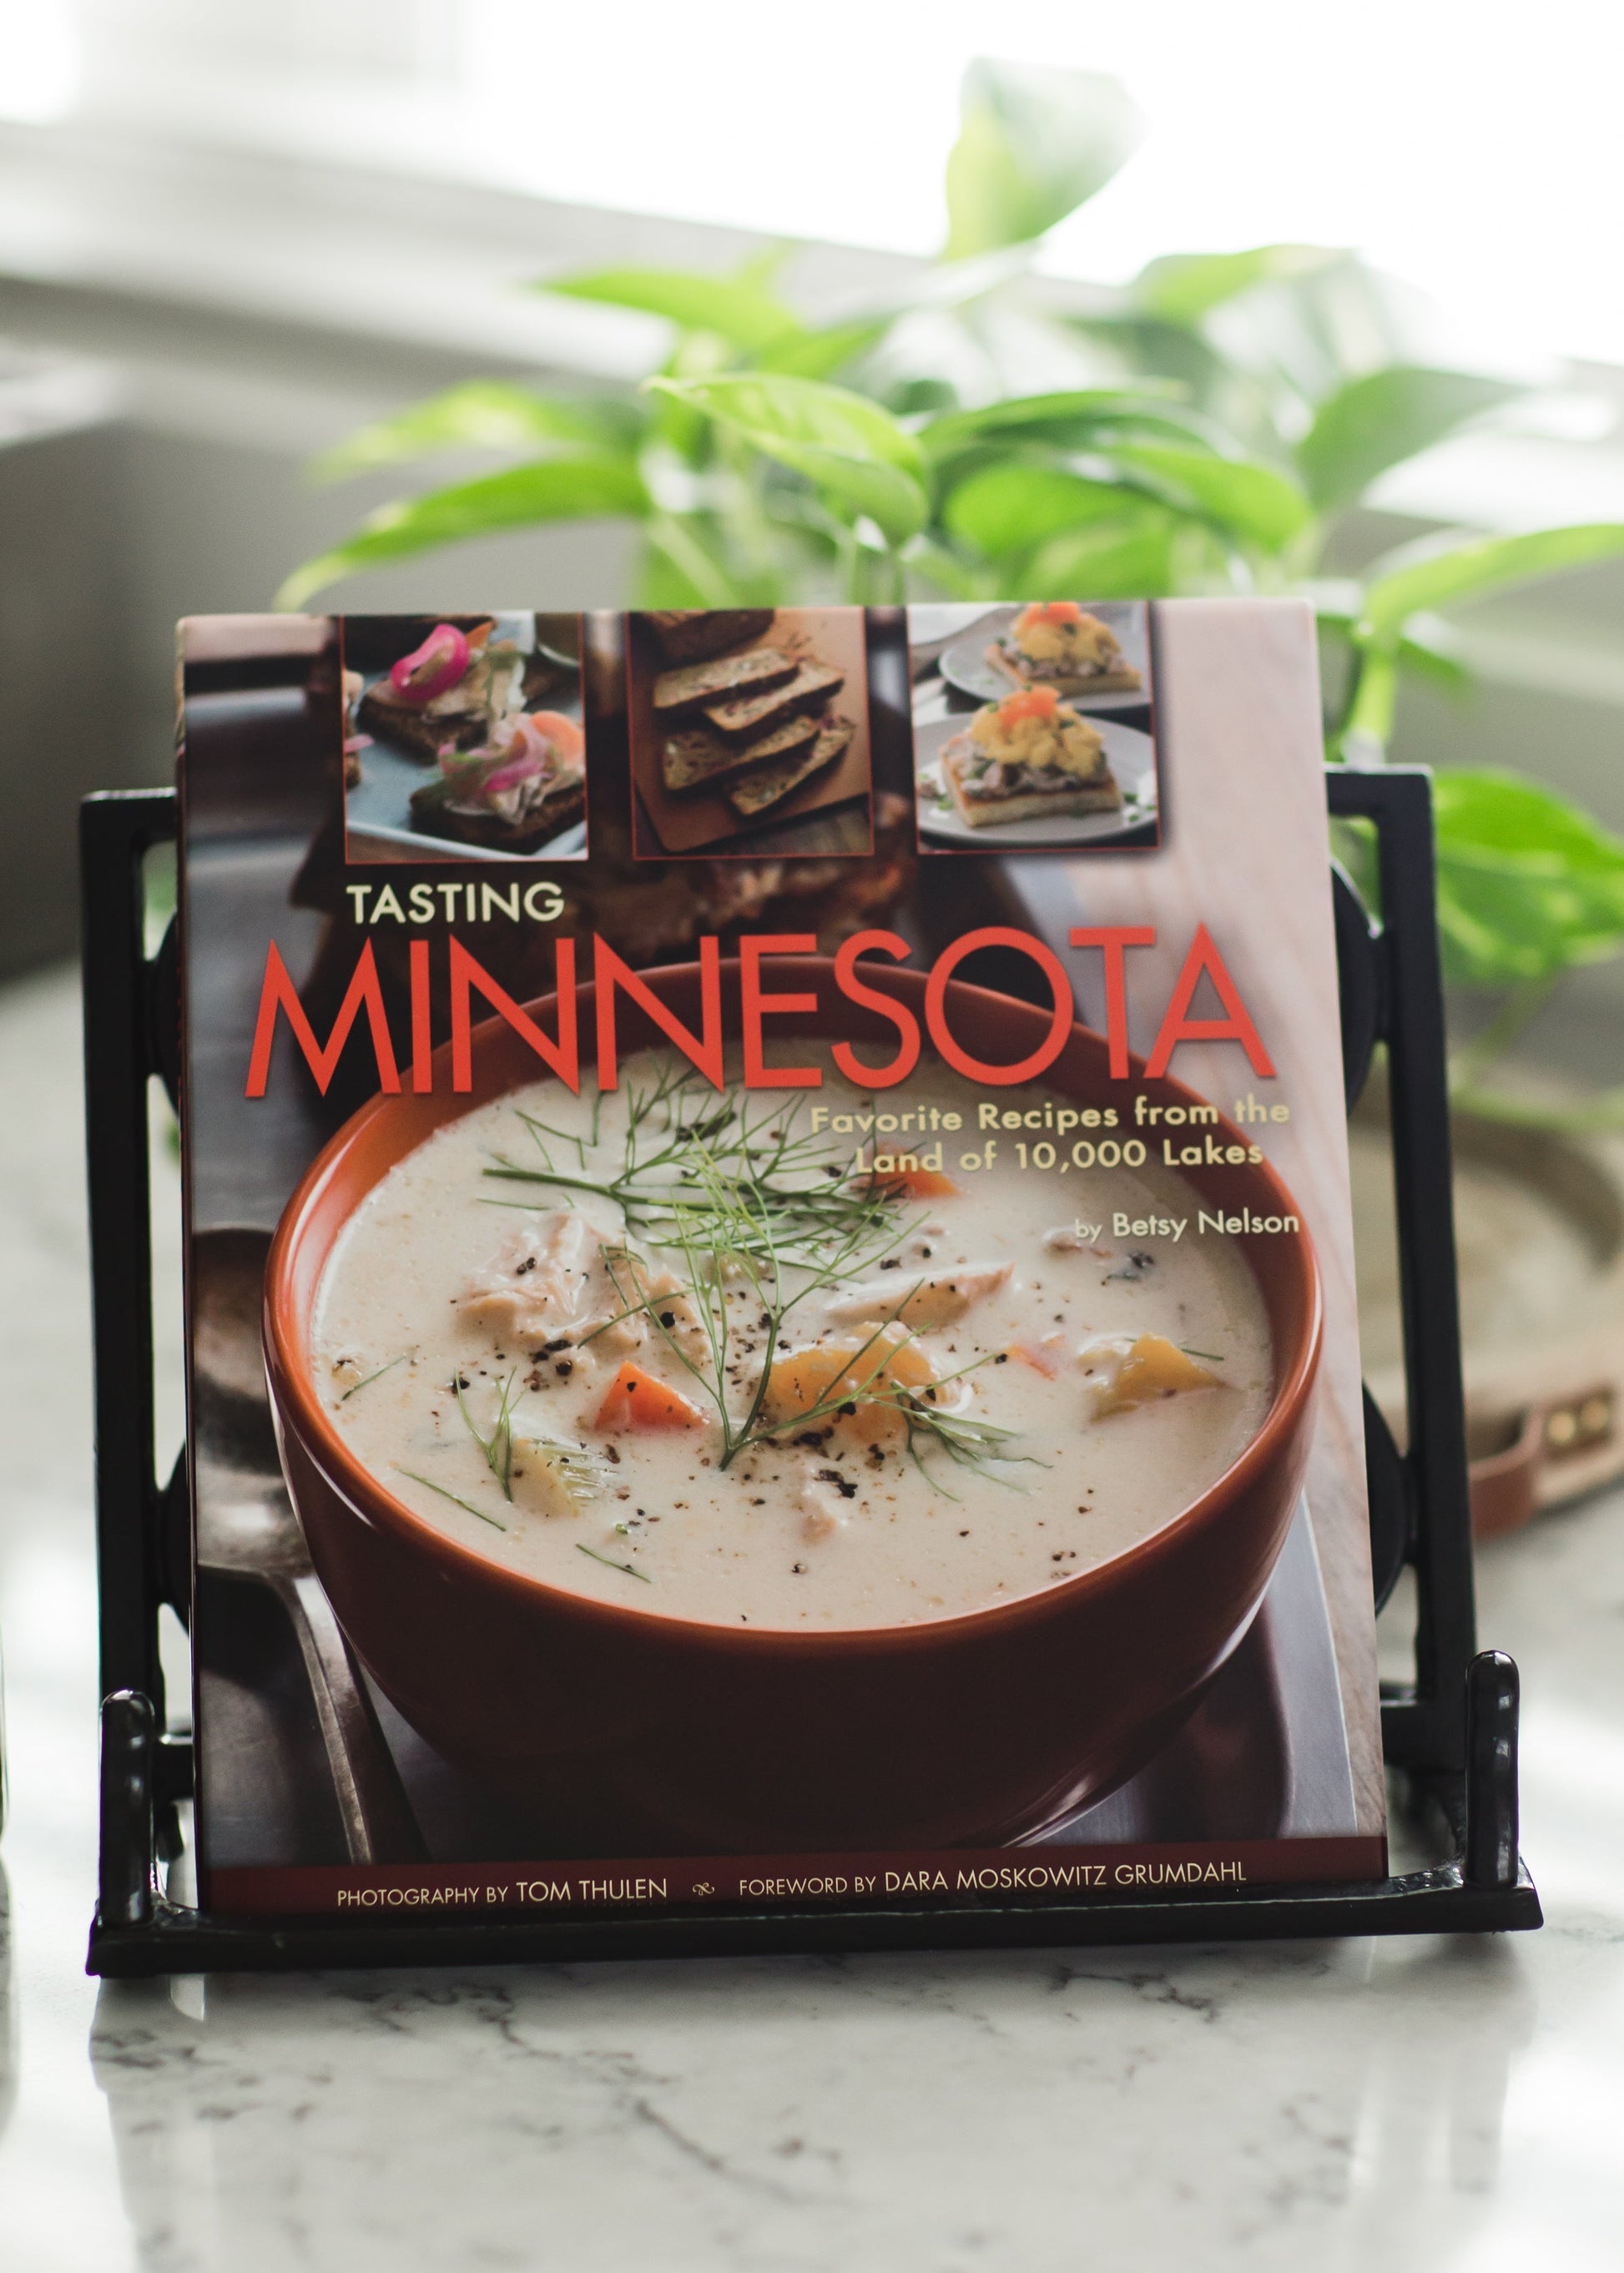 Tasting Minnesota Cook Book - FINAL SALE Home & Lifestyle